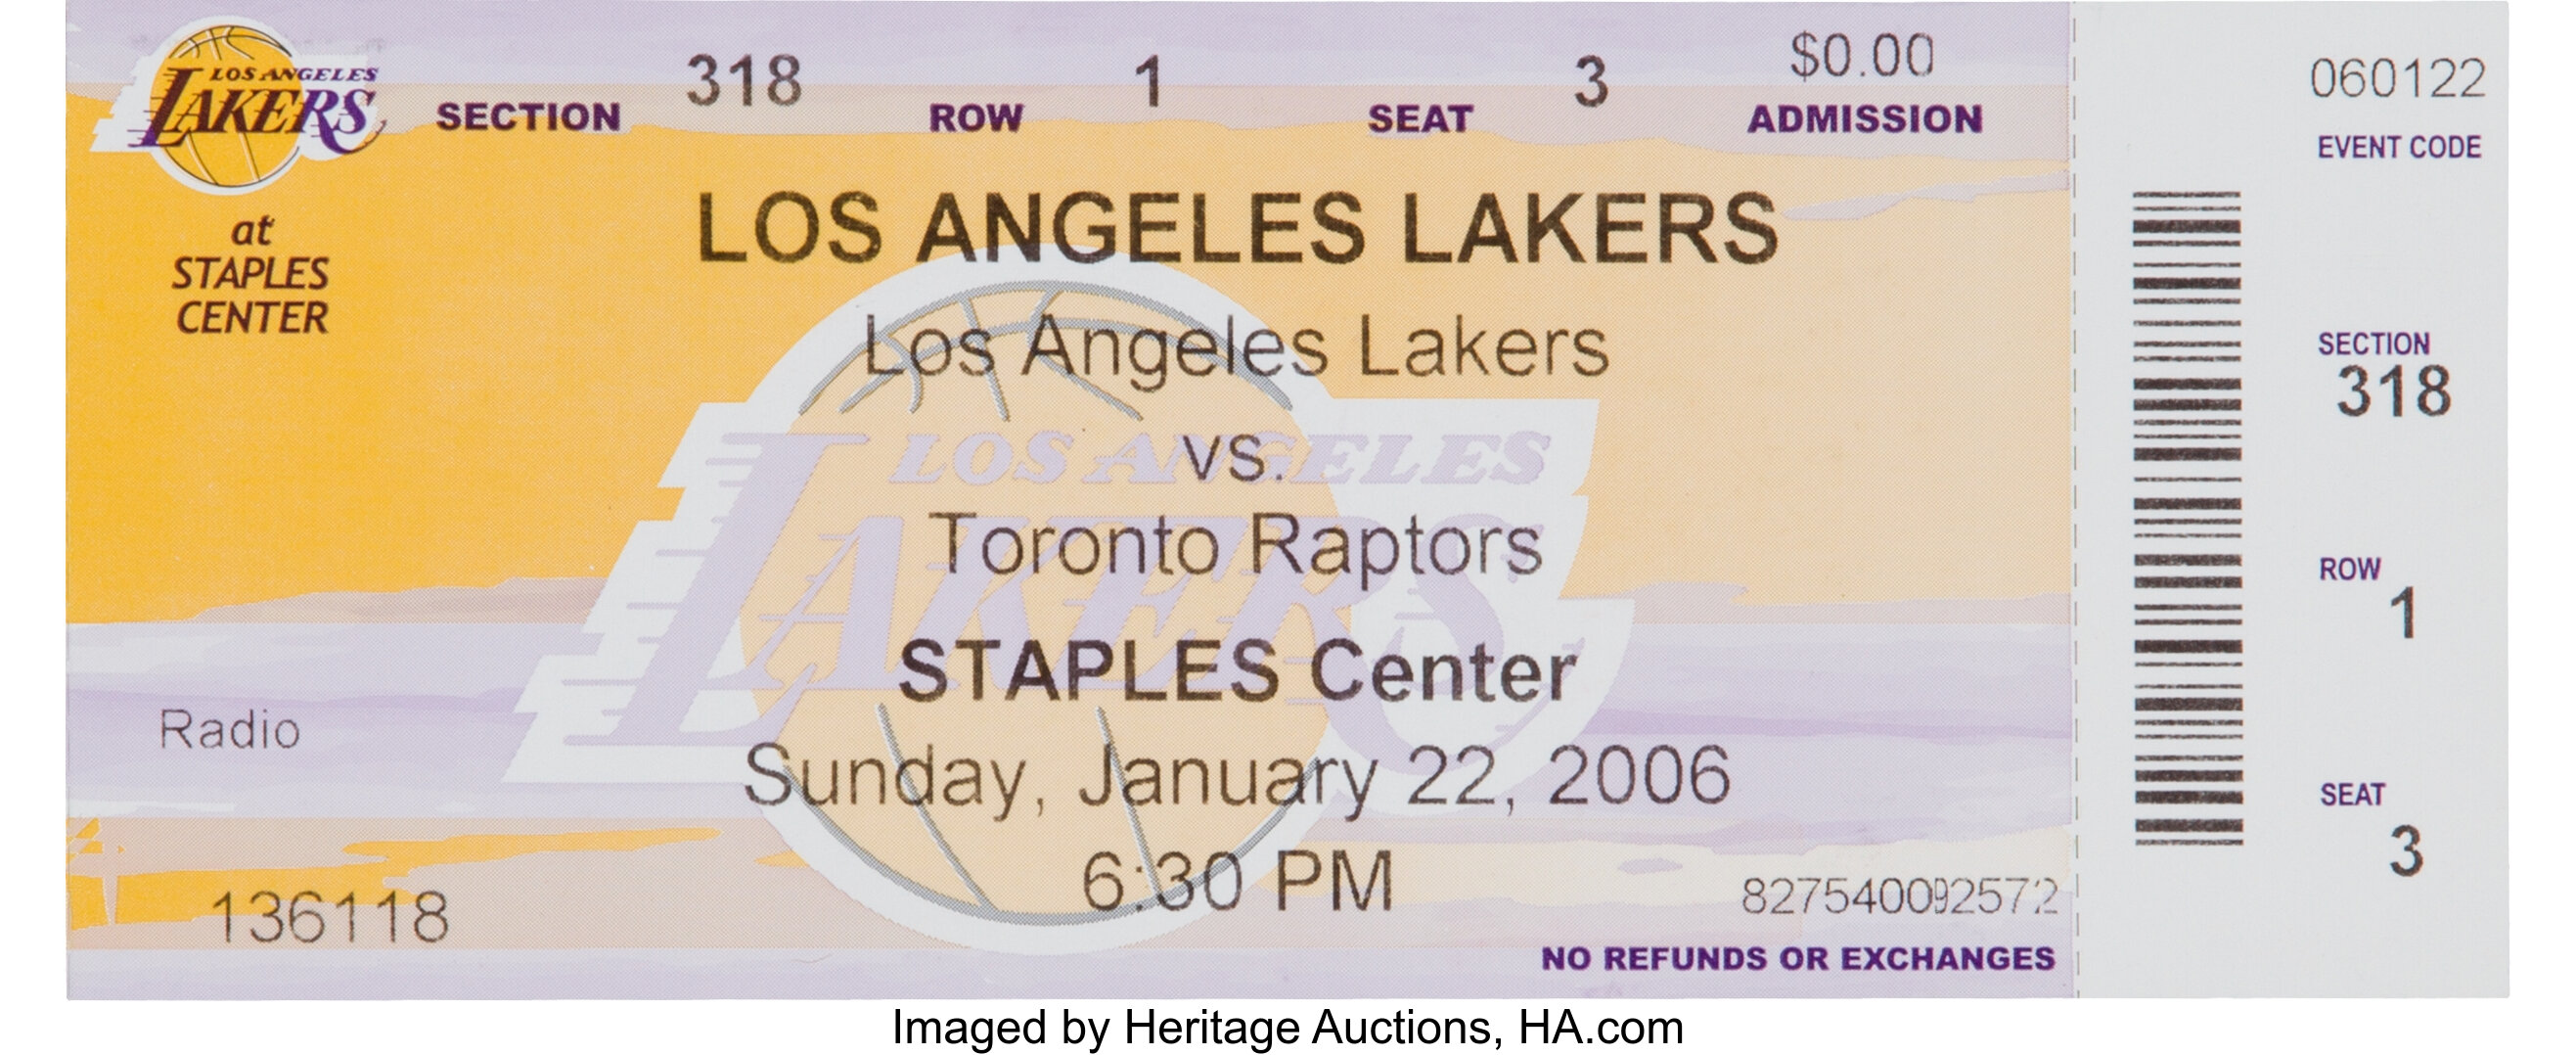 Kobe Bryant 81 Point Game 2006 / Full Ticket Lakers vs Raptors